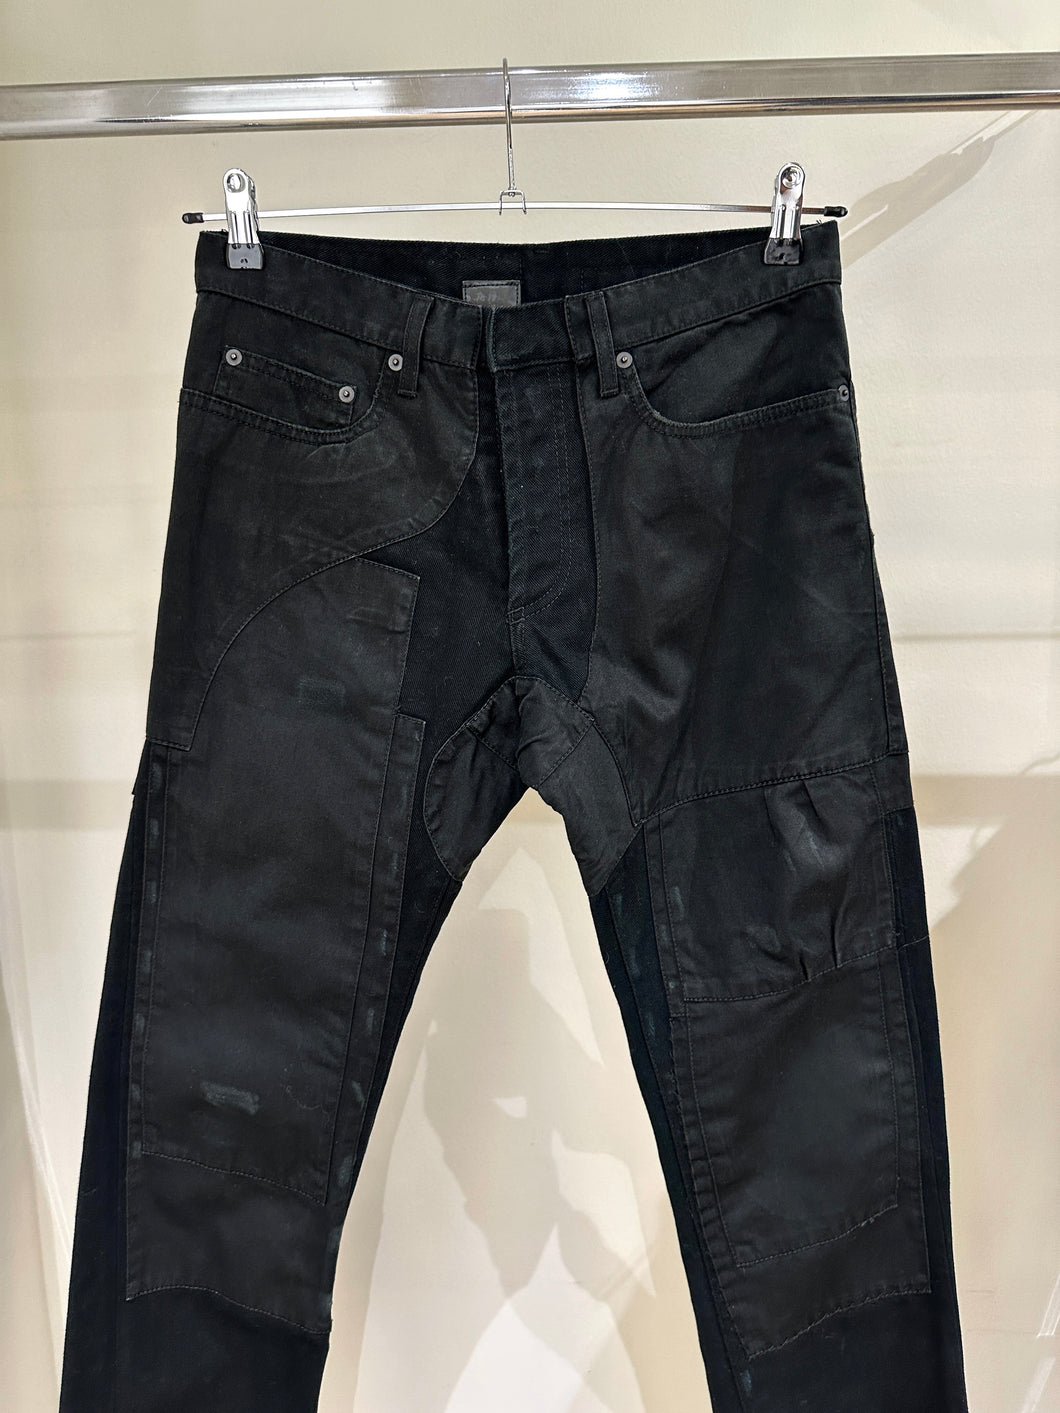 FW2007 Dior by Hedi Slimane “Navigate” patchwork jeans